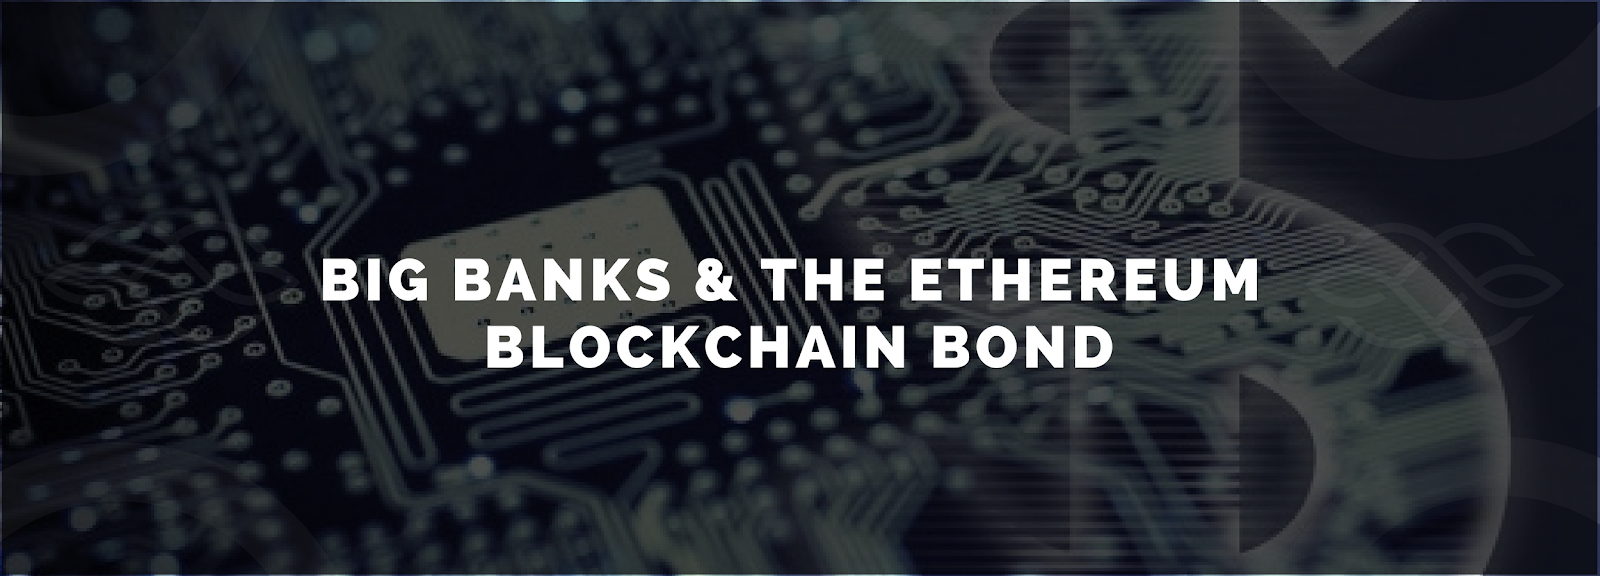 Big Banks & the Ethereum Blockchain Bond